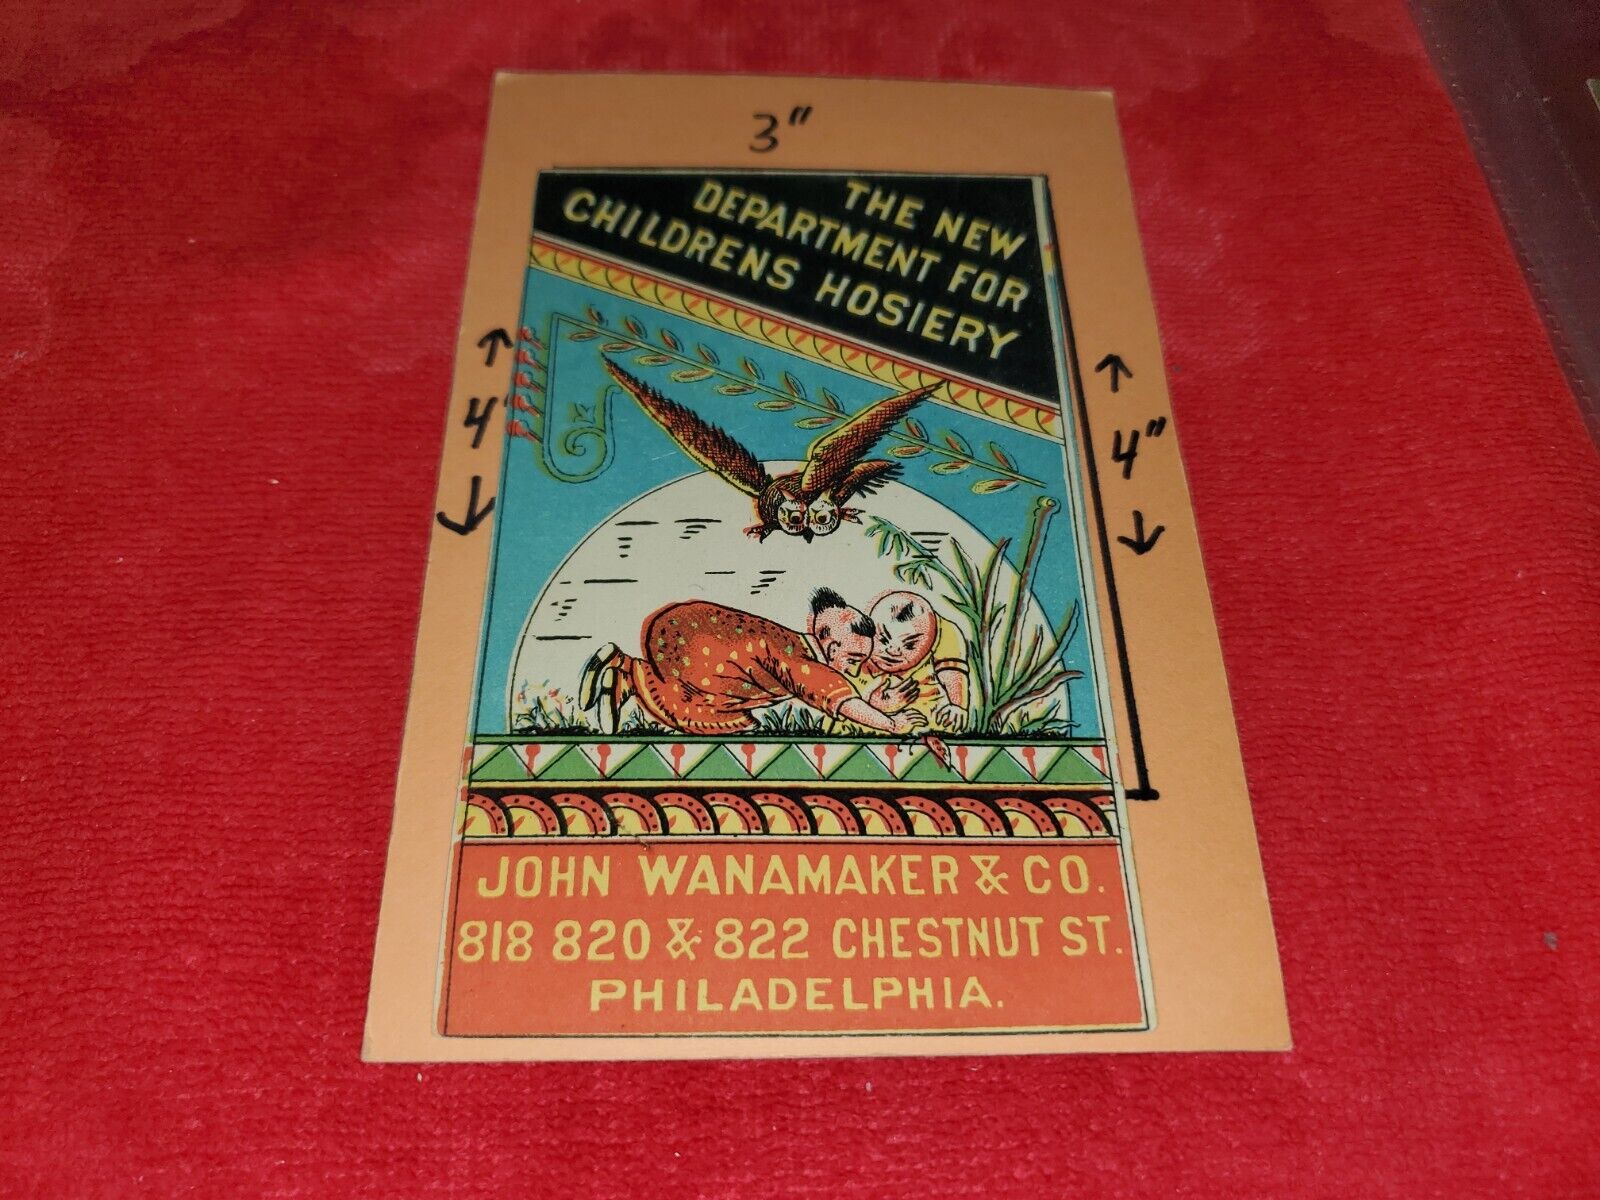 VICTORIAN TRADE CARD JOHN WANNAMAKER DEPT OF CHILDRENS HOSIERY